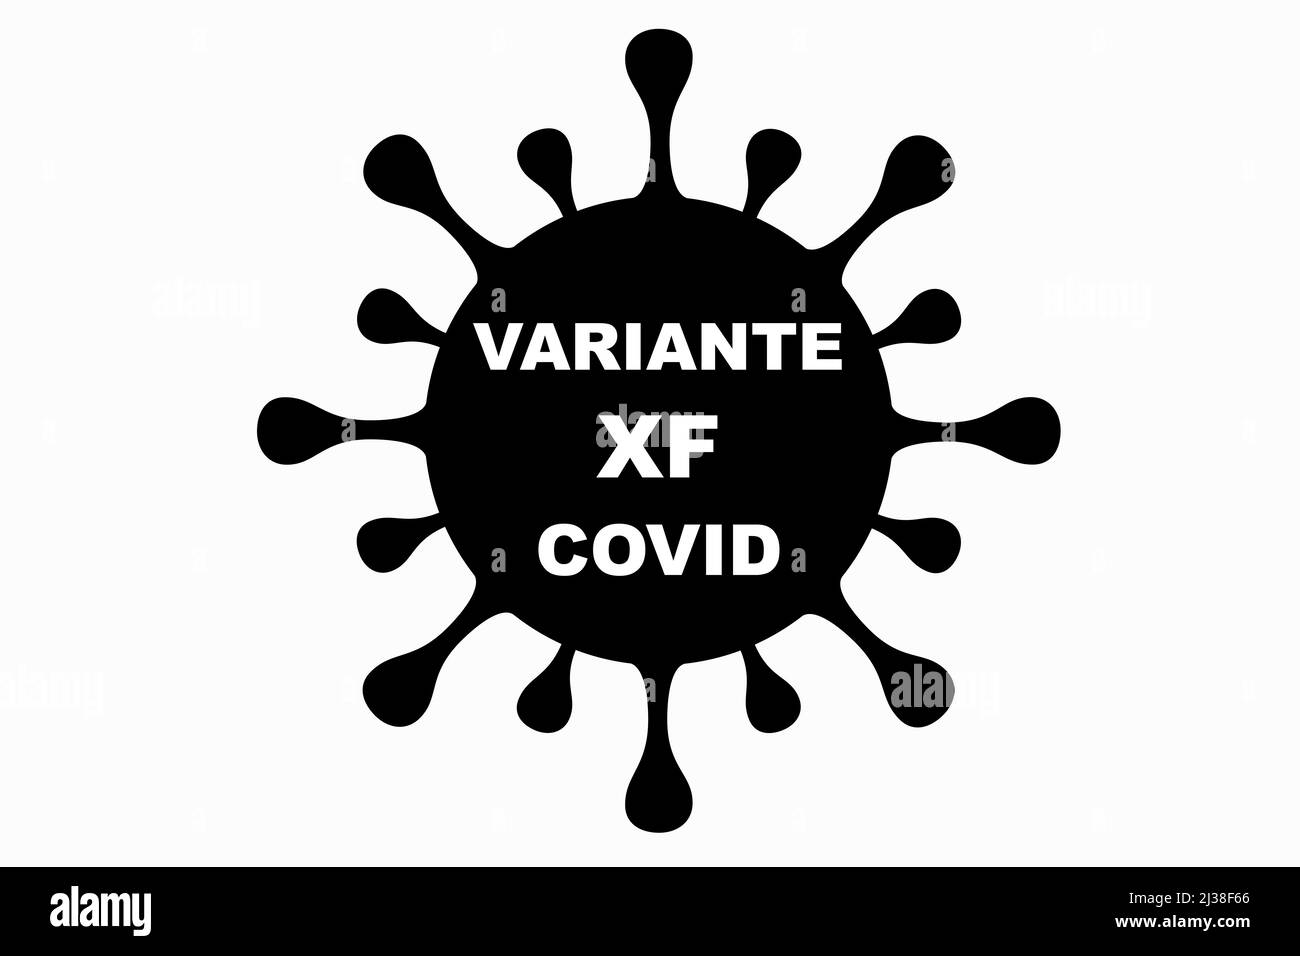 XF. New variant of the SARS-CoV-2 coronavirus. Subvariant of Omicron. Design horizontal. Virus design and black text. Illustration. Stock Photo